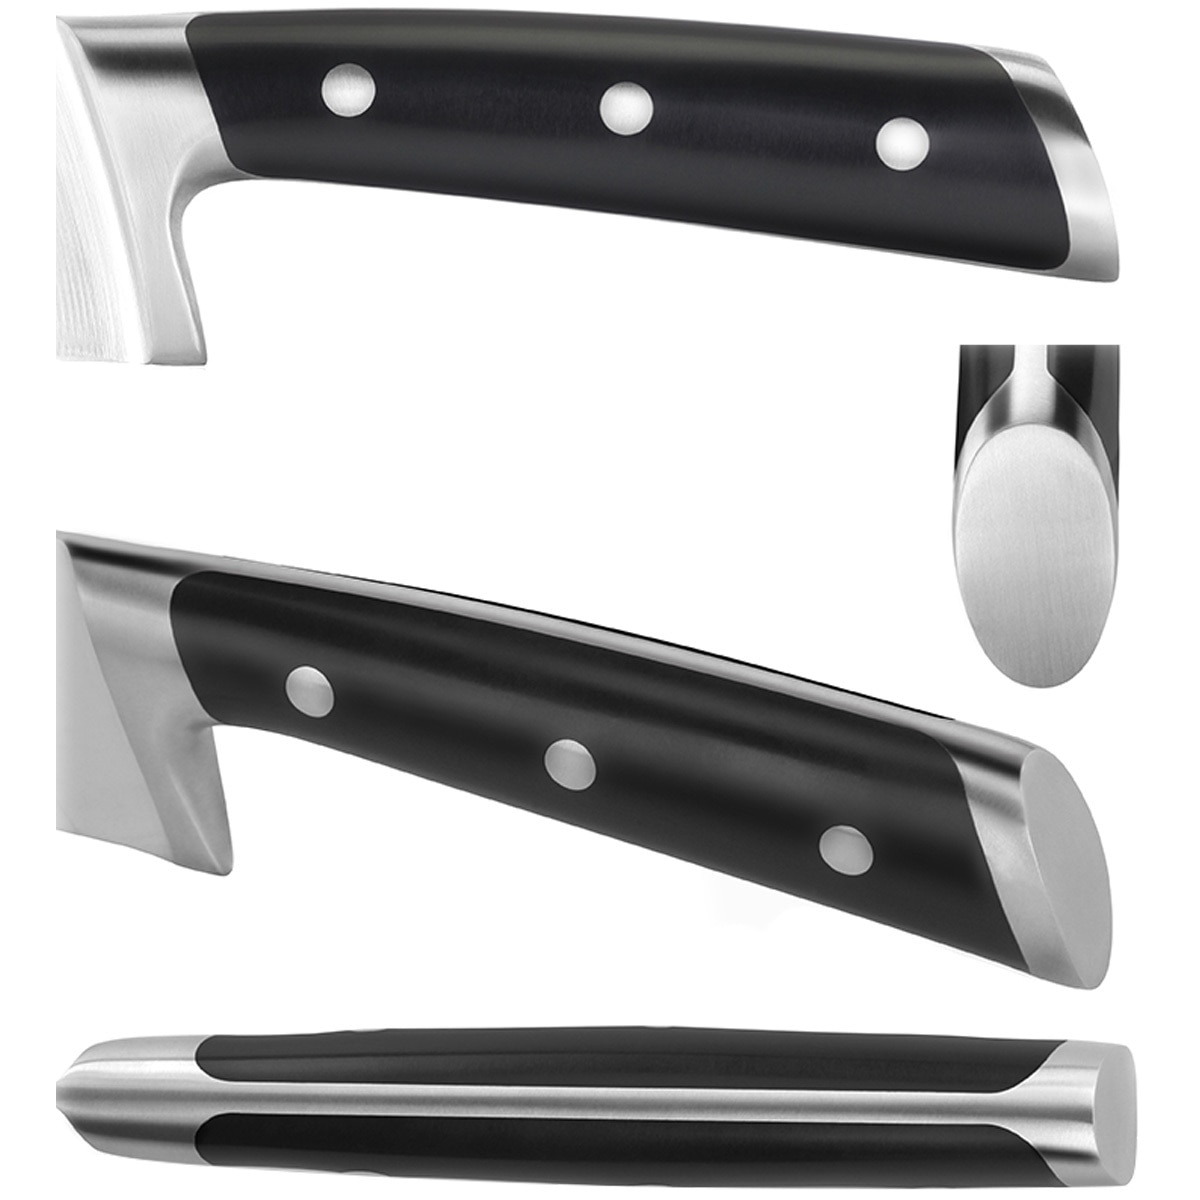 Cangshan S Series German Steel Forged 12-Piece Knife Block Set